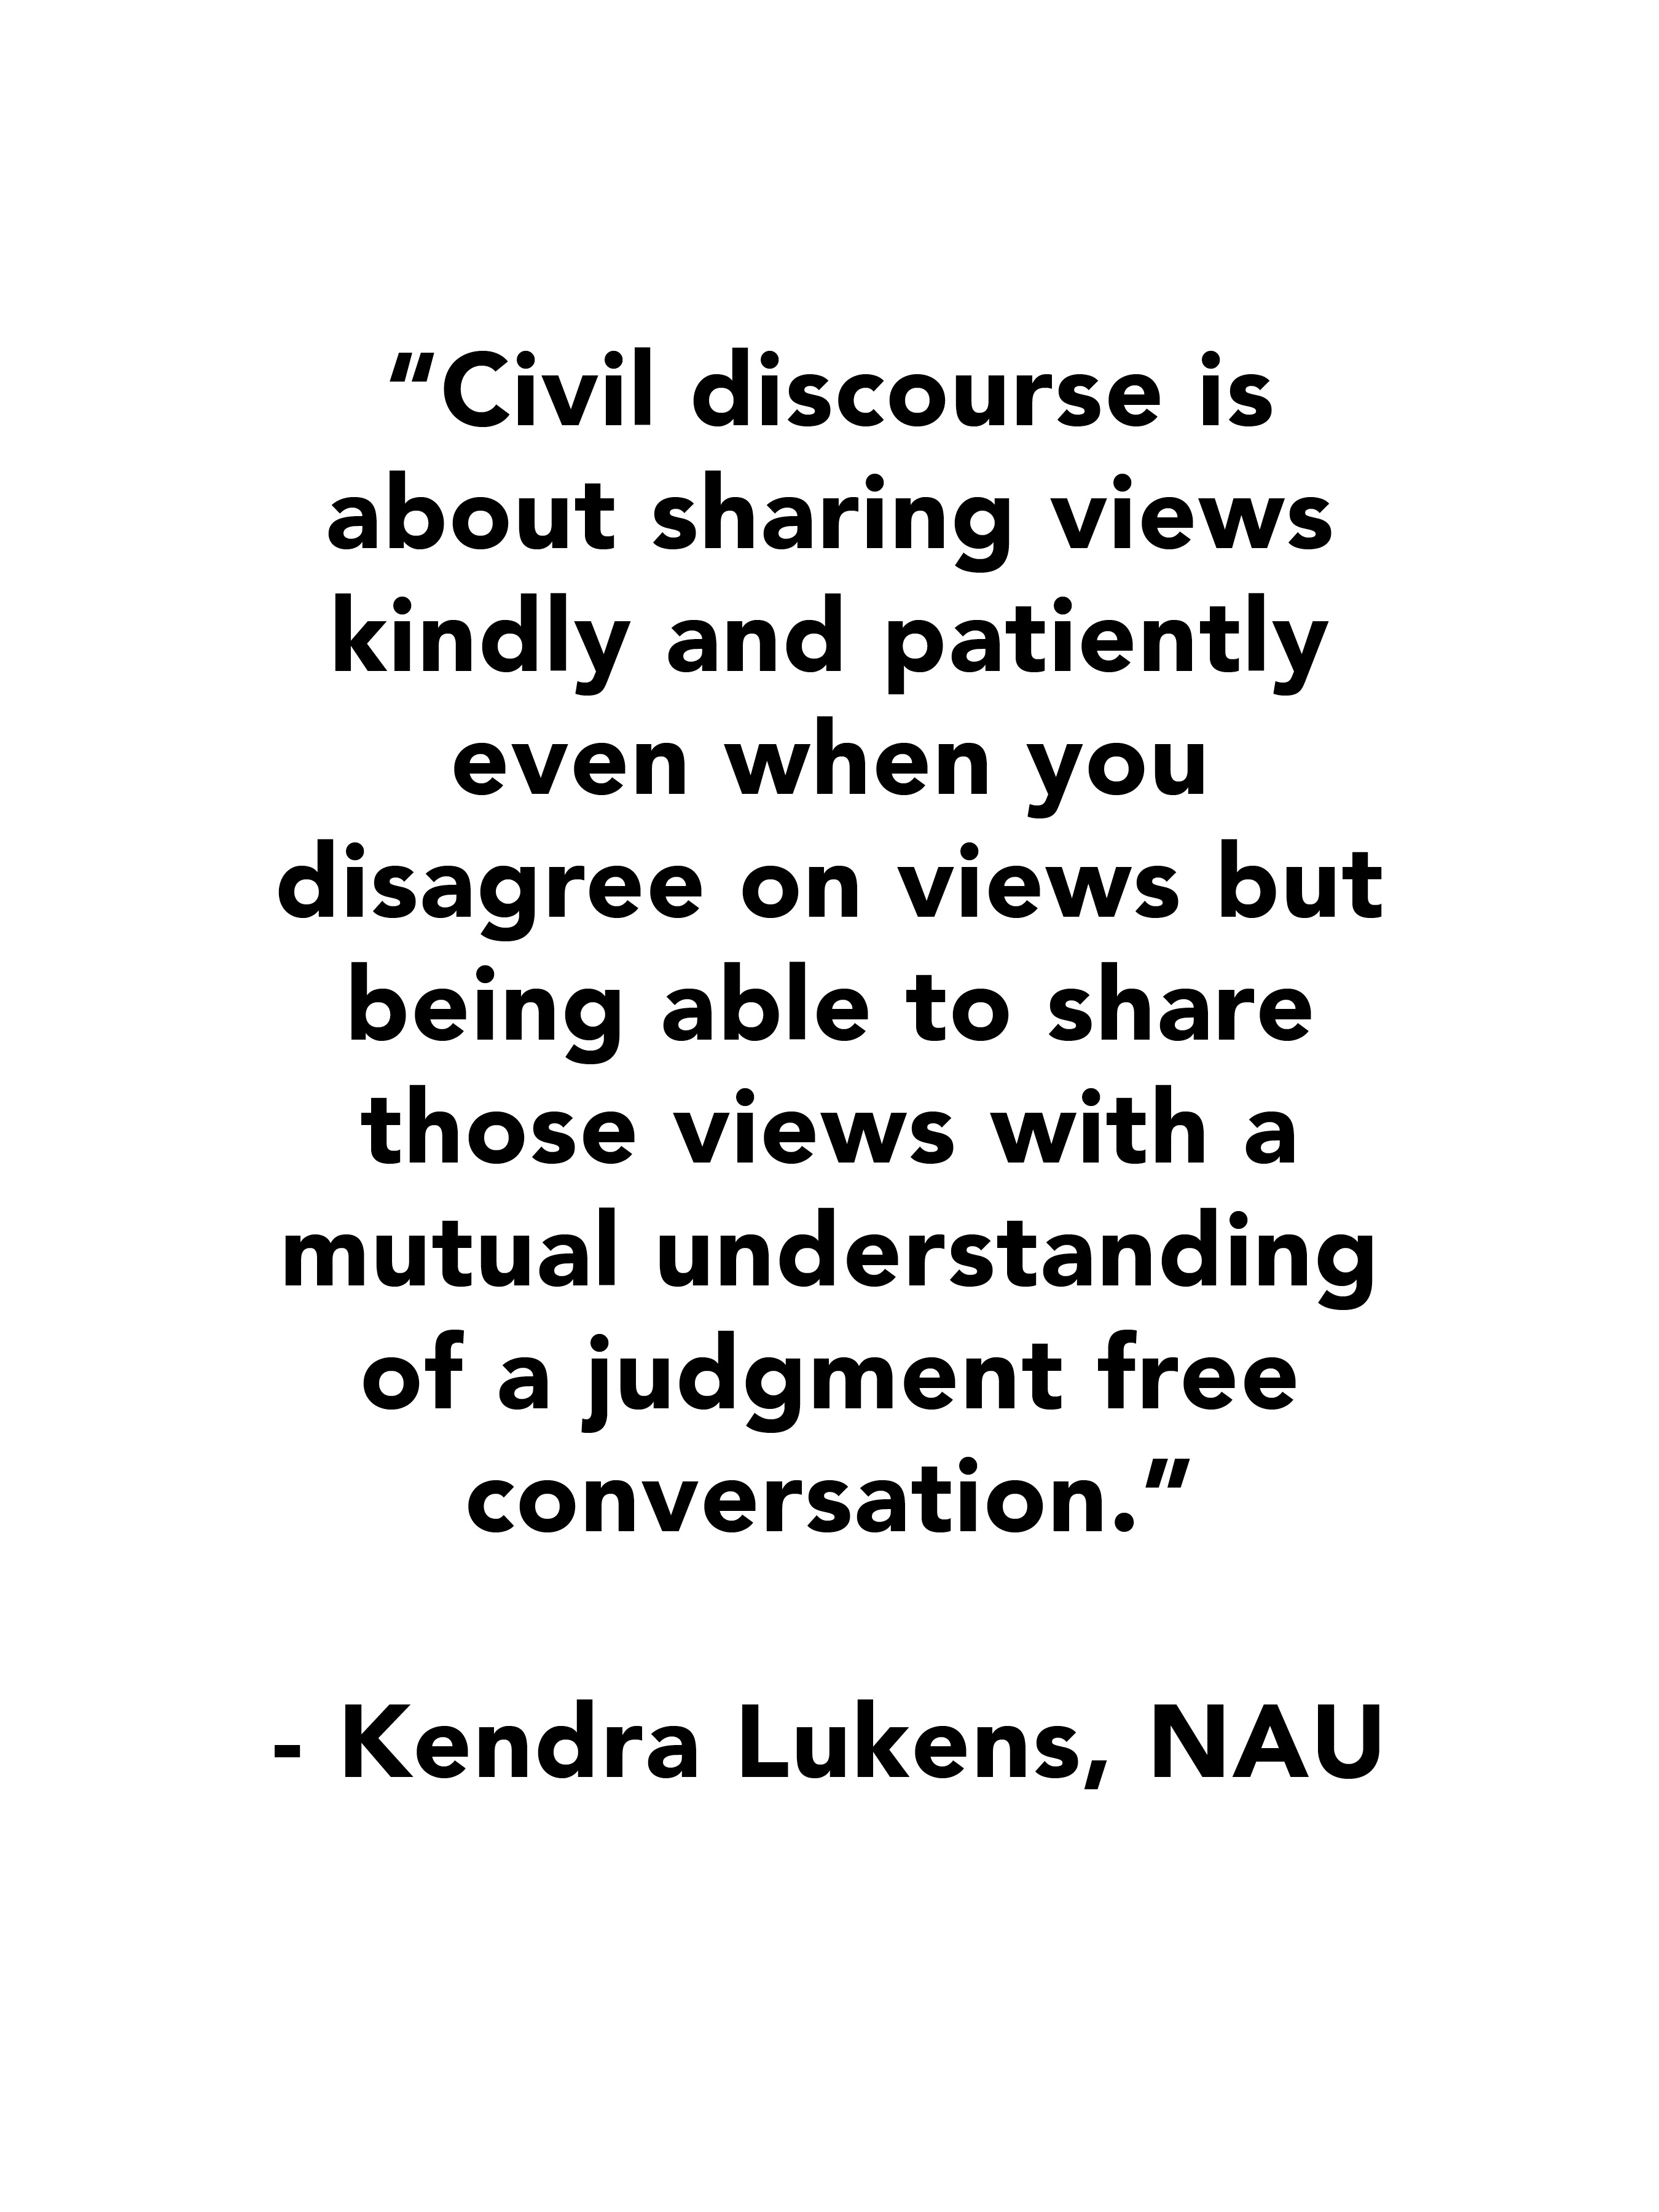 Kendra Lukens Quote, NAU -White